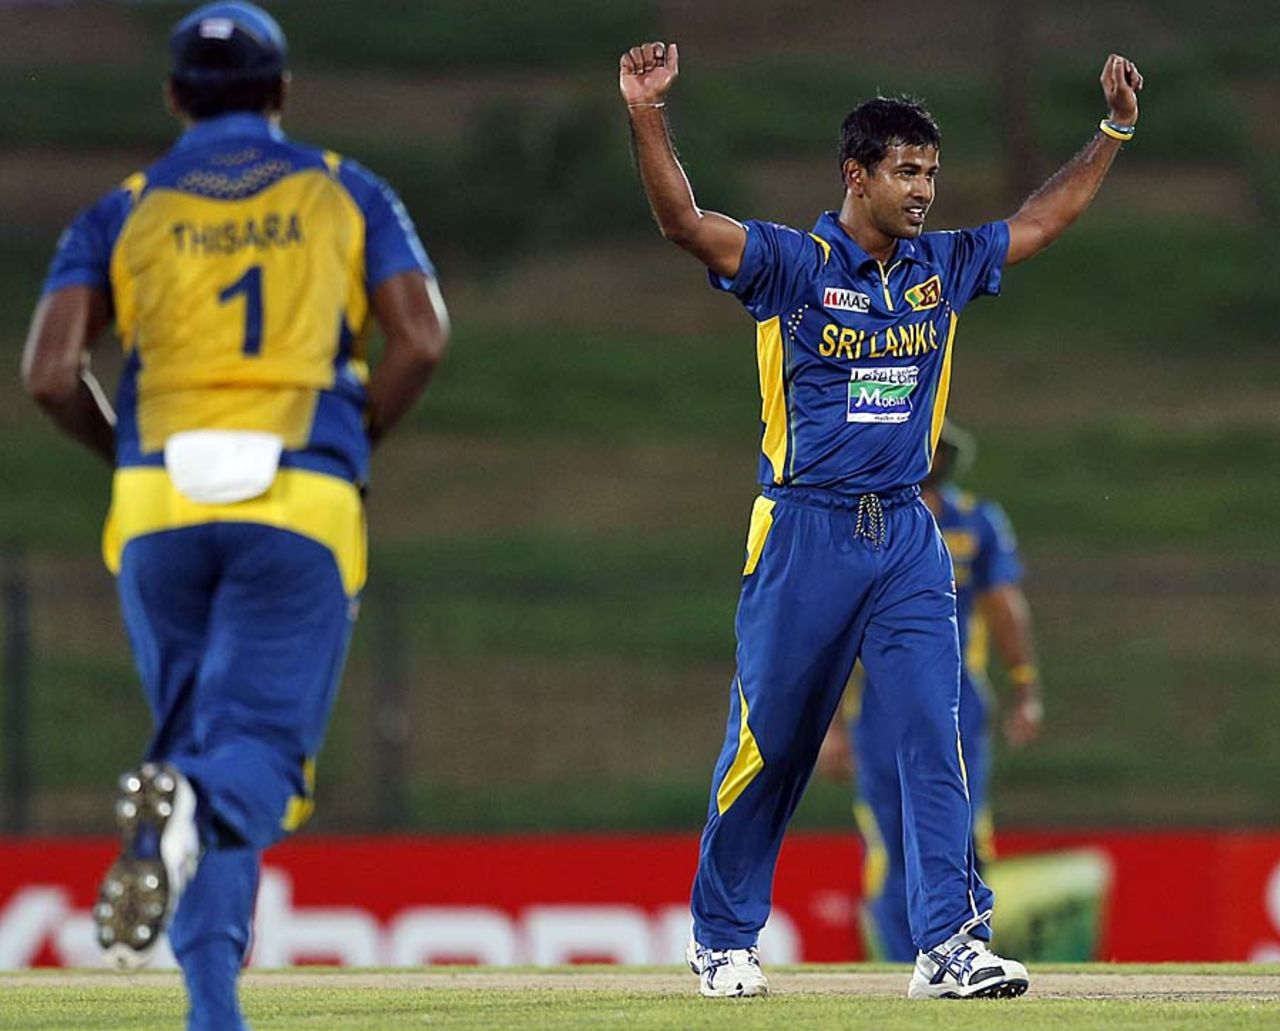 Kulasekara took the early wicket of Rob Nicol, Sri Lanka v New Zealand, 4th ODI, Hambantota, November 10, 2012